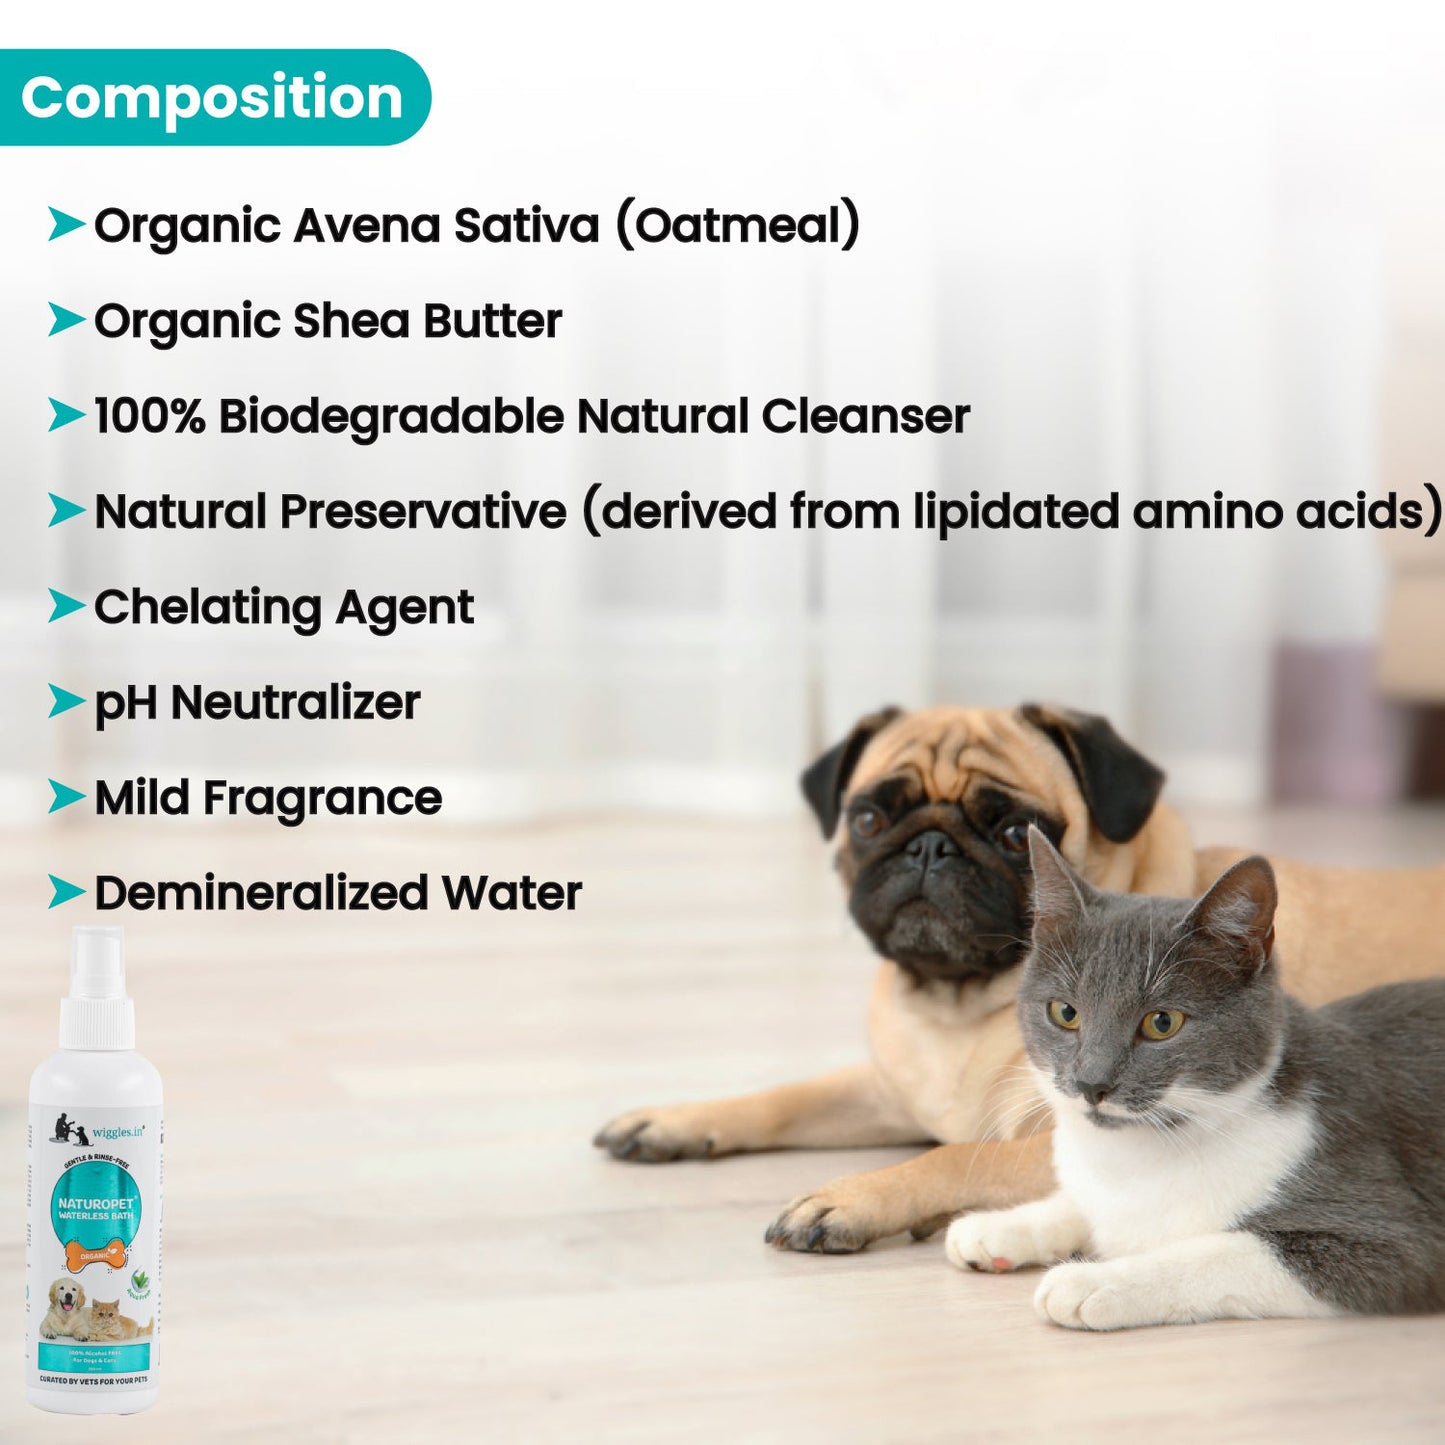 Naturopet - Organic Dry Waterless Bath Shampoo for Dogs & Cats